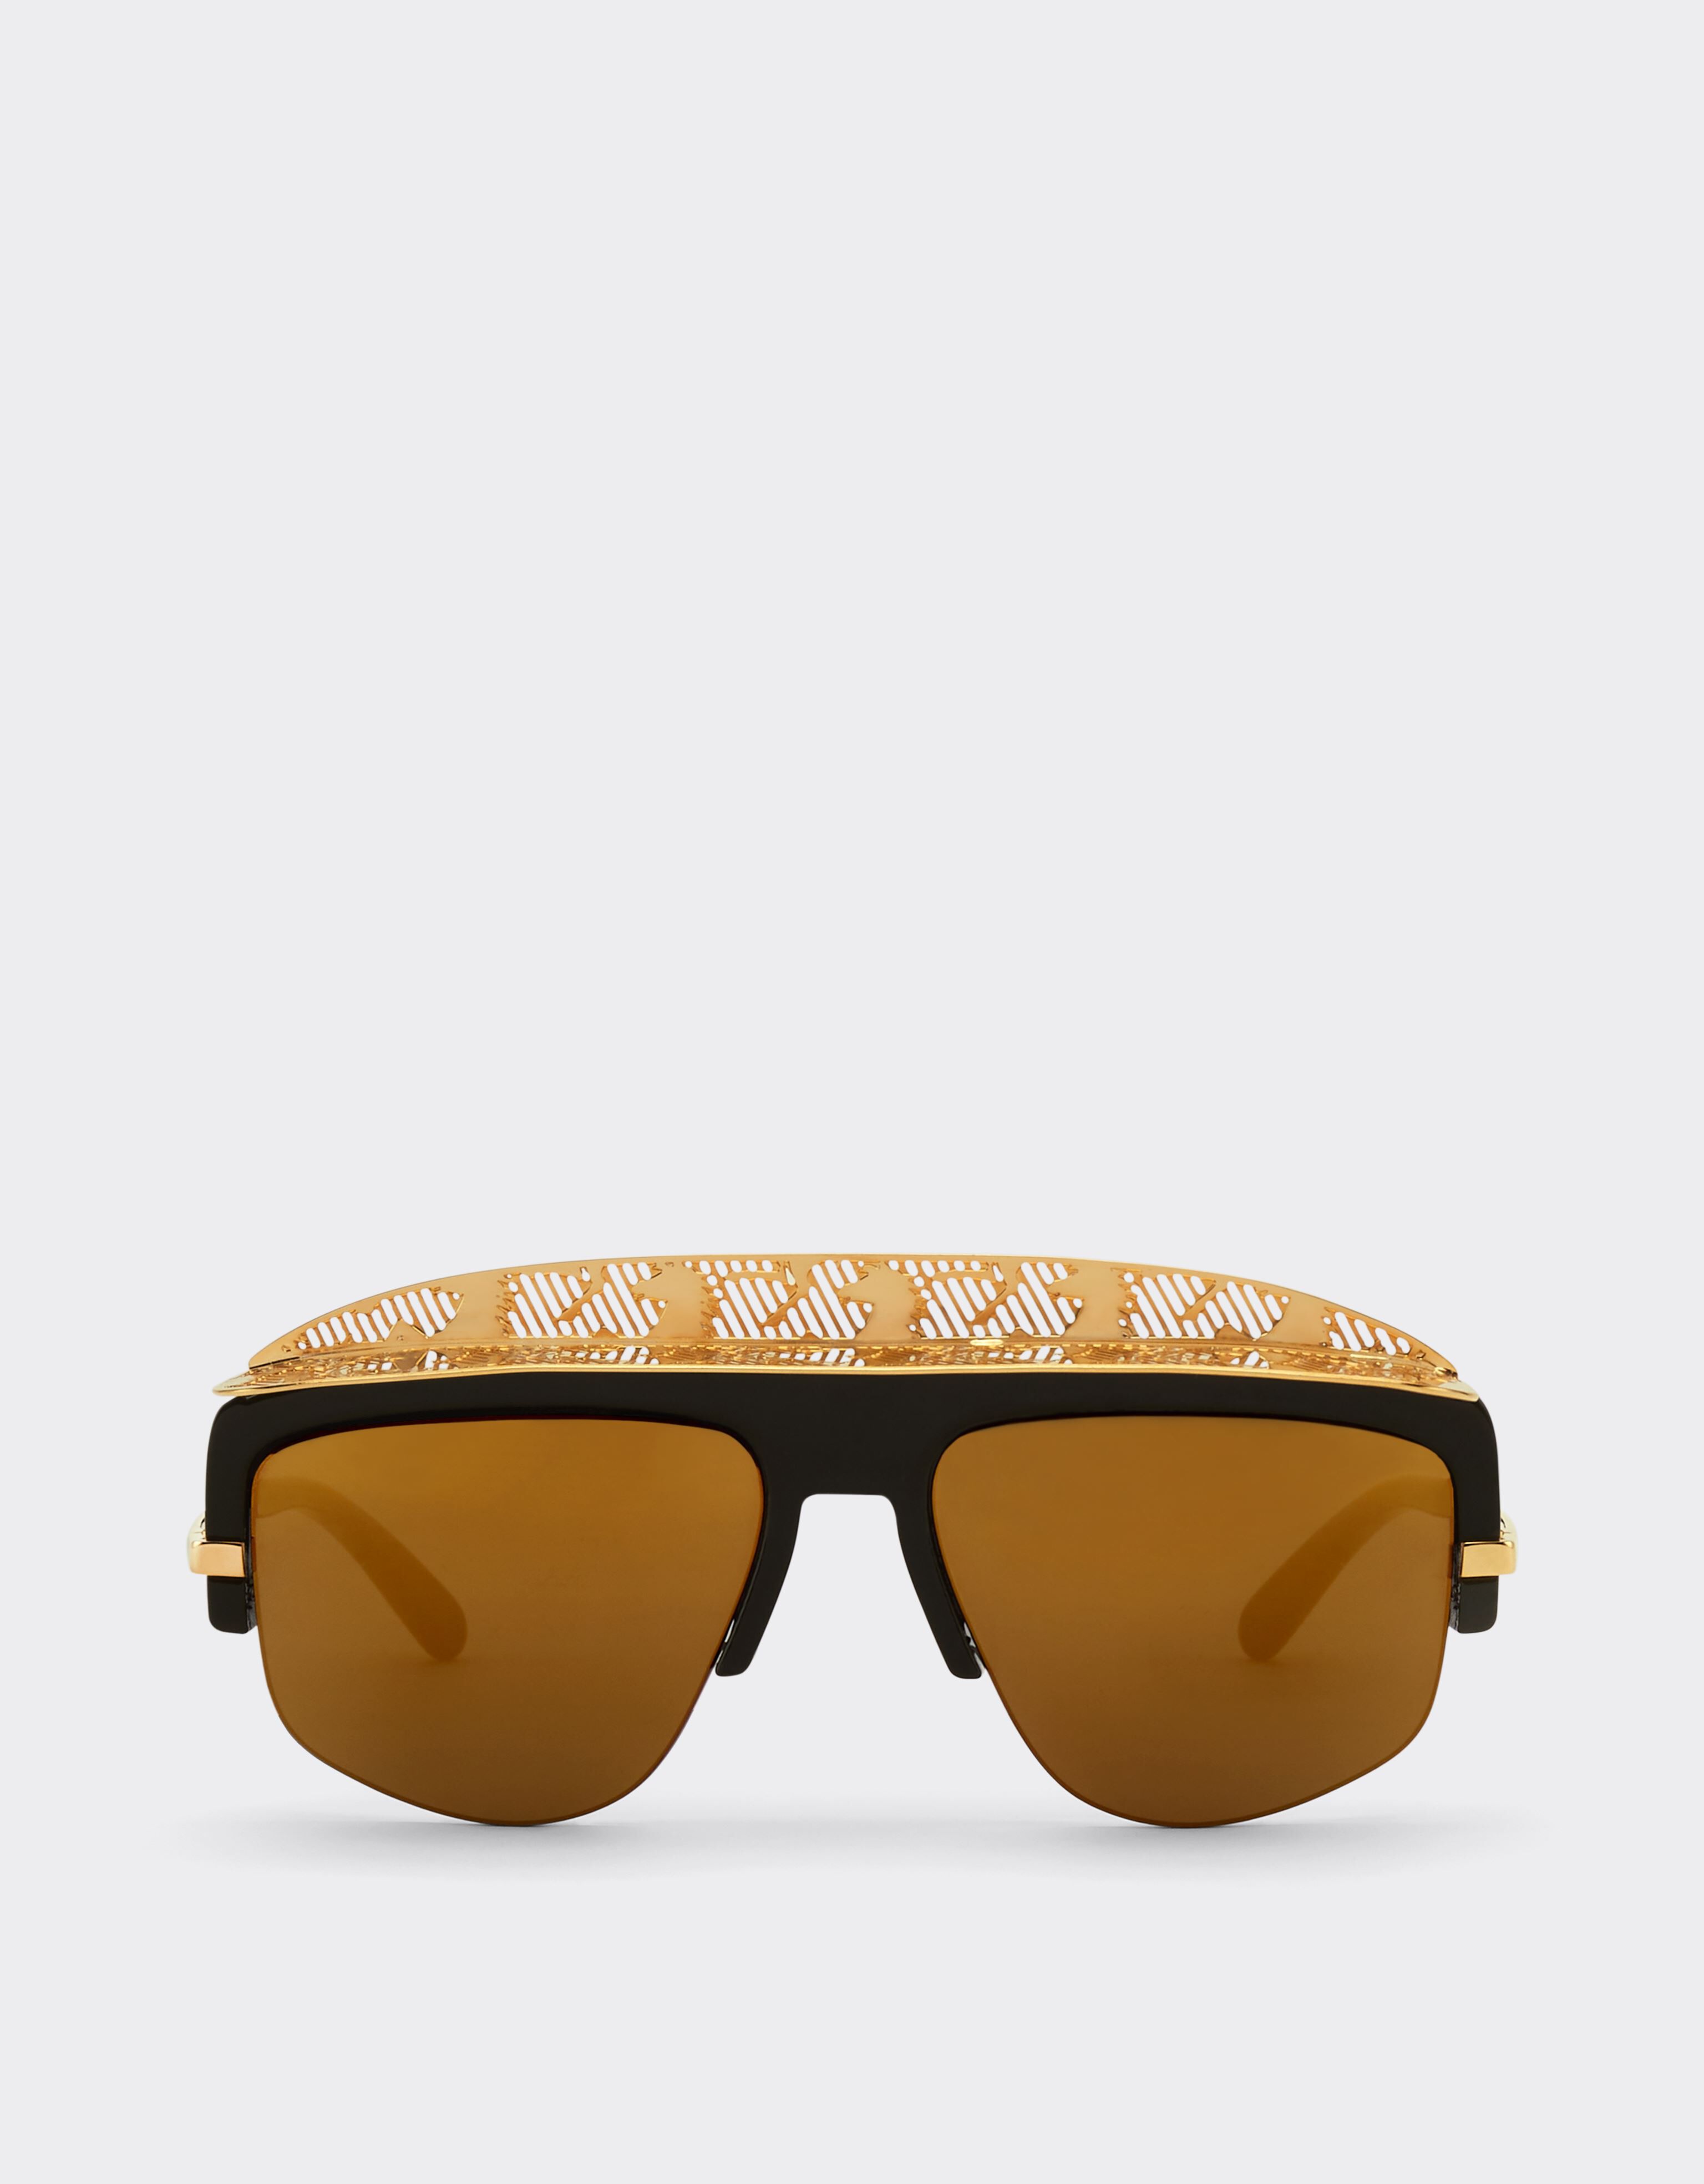 Ferrari Ferrari sunglasses with gold mirror lens Black F1201f